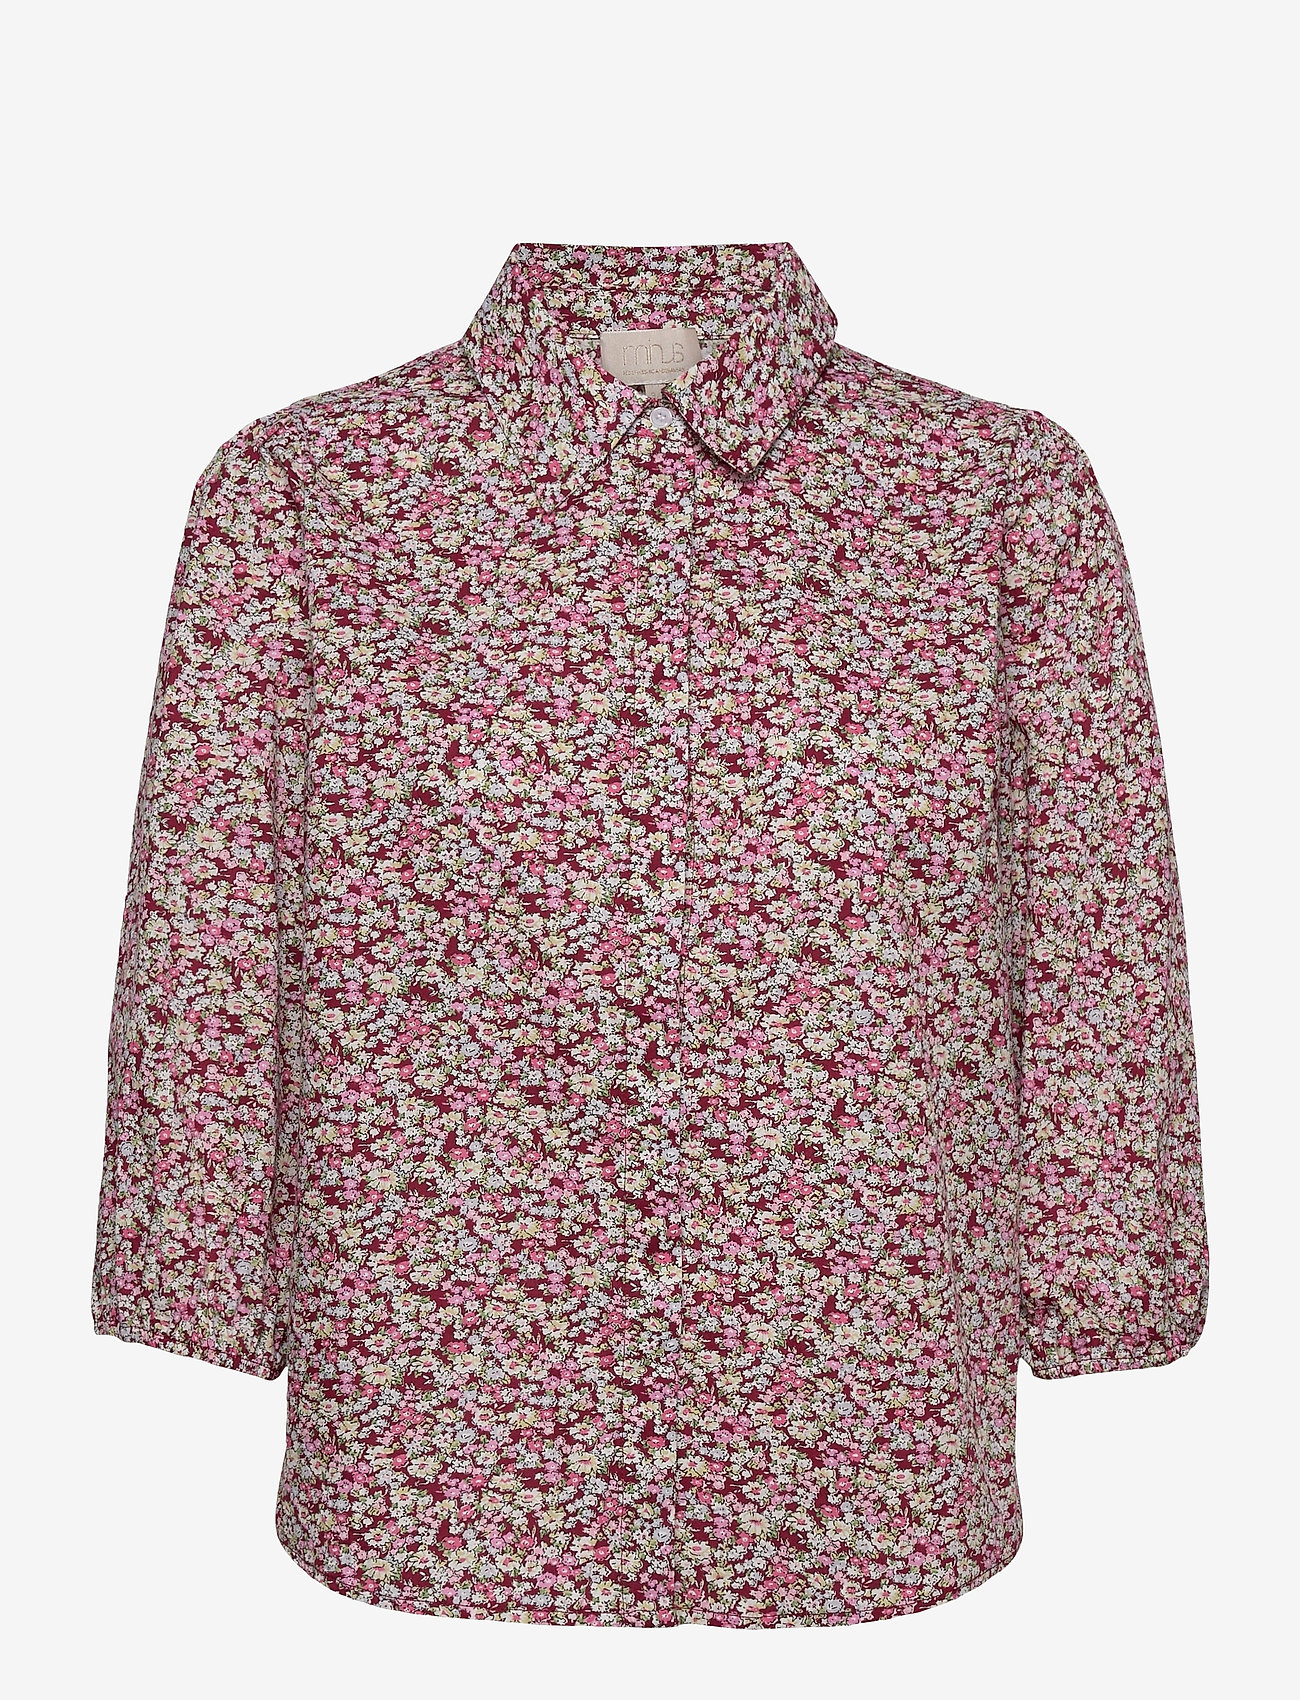 Minus - Rasmina shirt - langärmlige hemden - pink flower print - 0